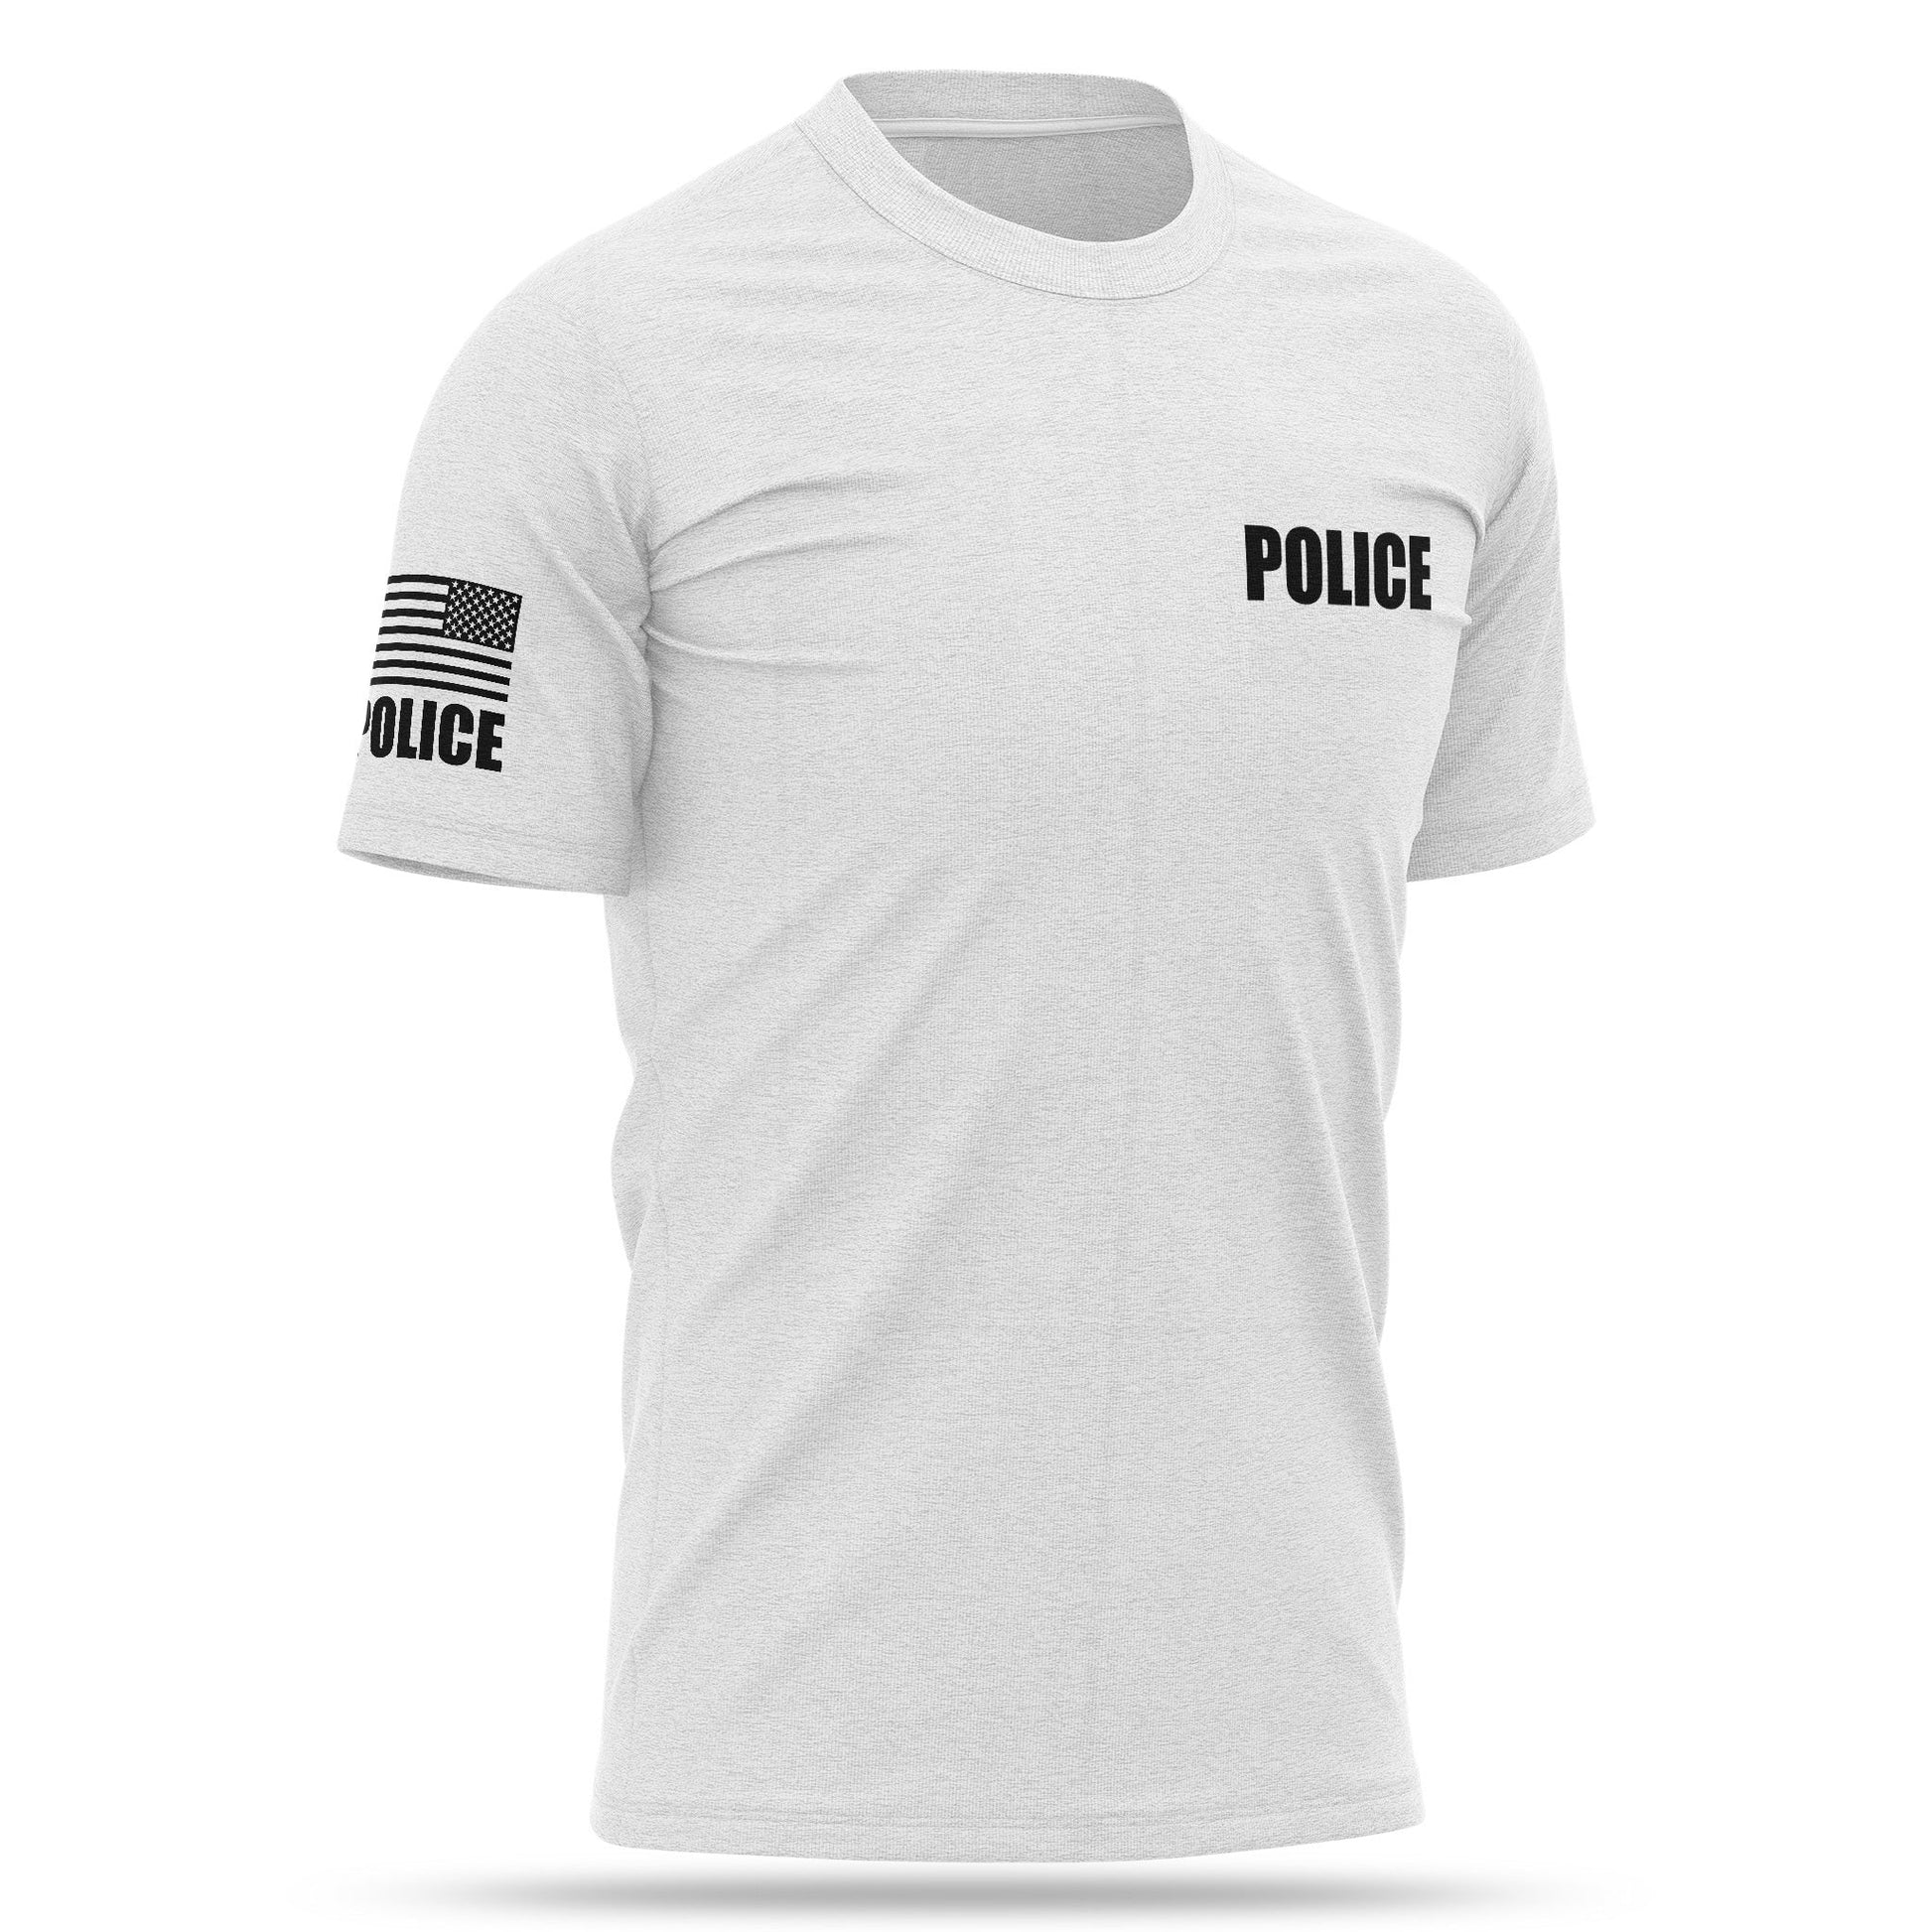 [POLICE] Cotton Blend Shirt [WHT/BLK]-13 Fifty Apparel